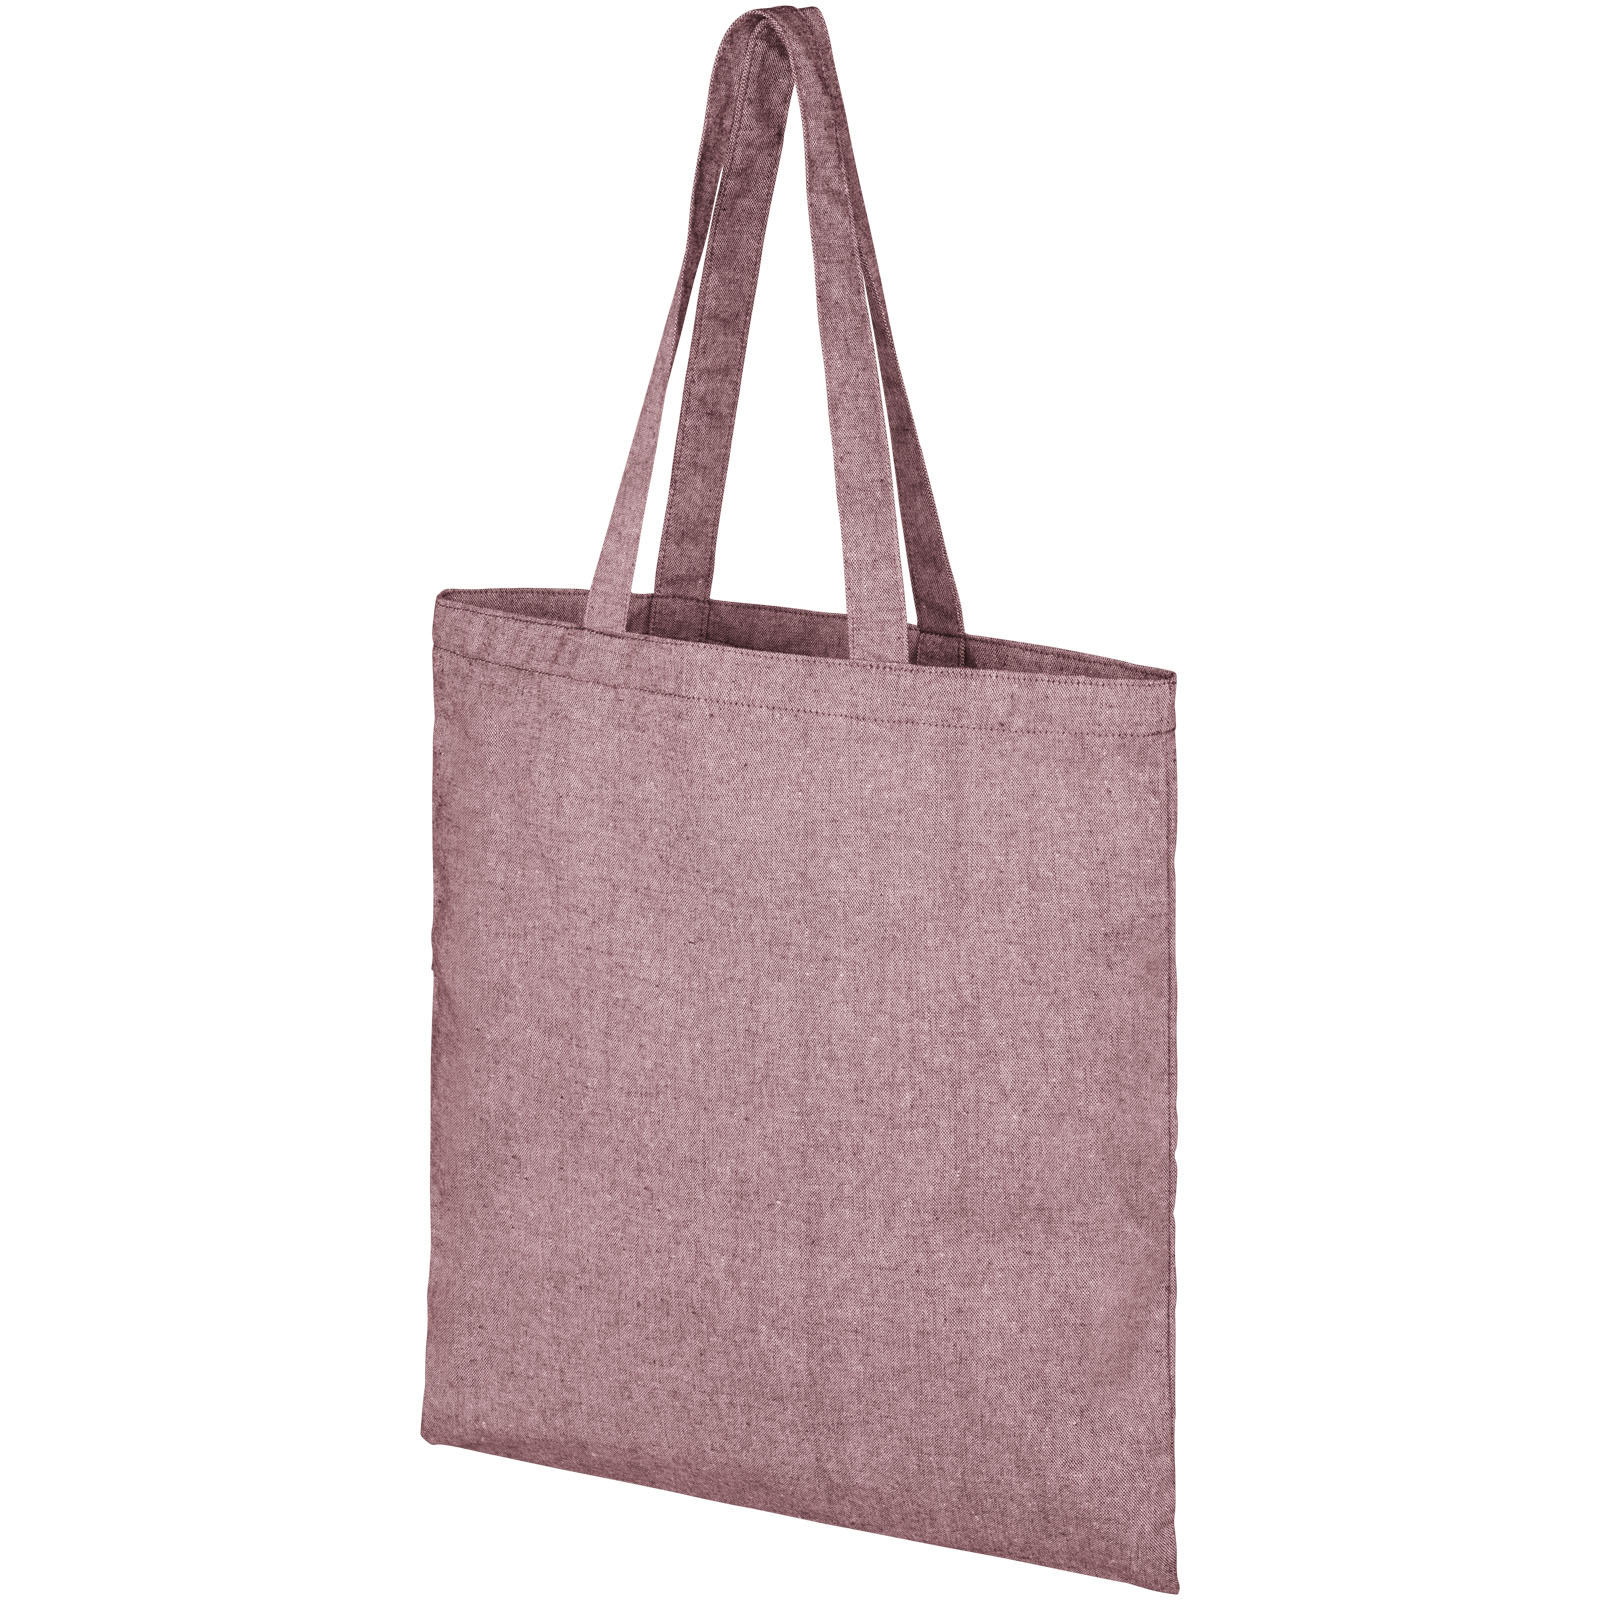 Bags - Pheebs 210 g/m² recycled tote bag 7L